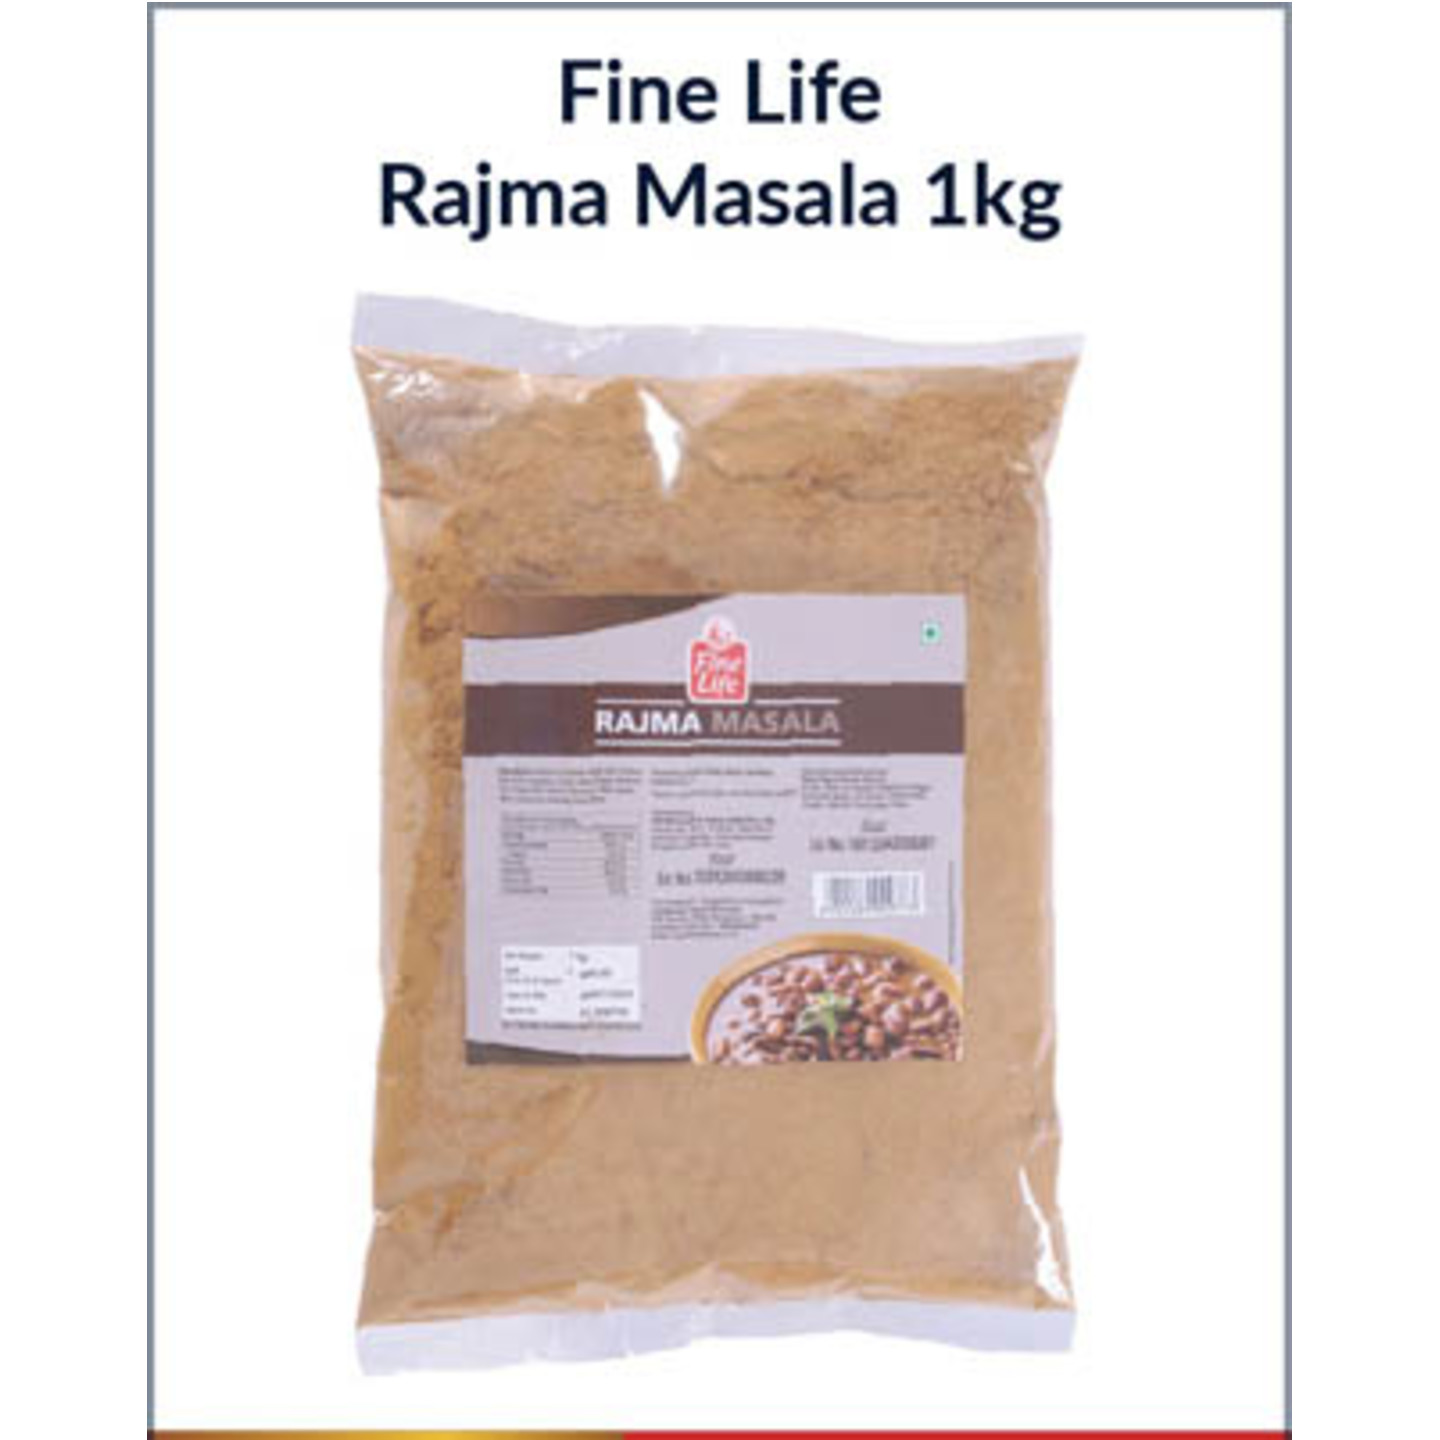 Fine Life Rajma Masala 1KG